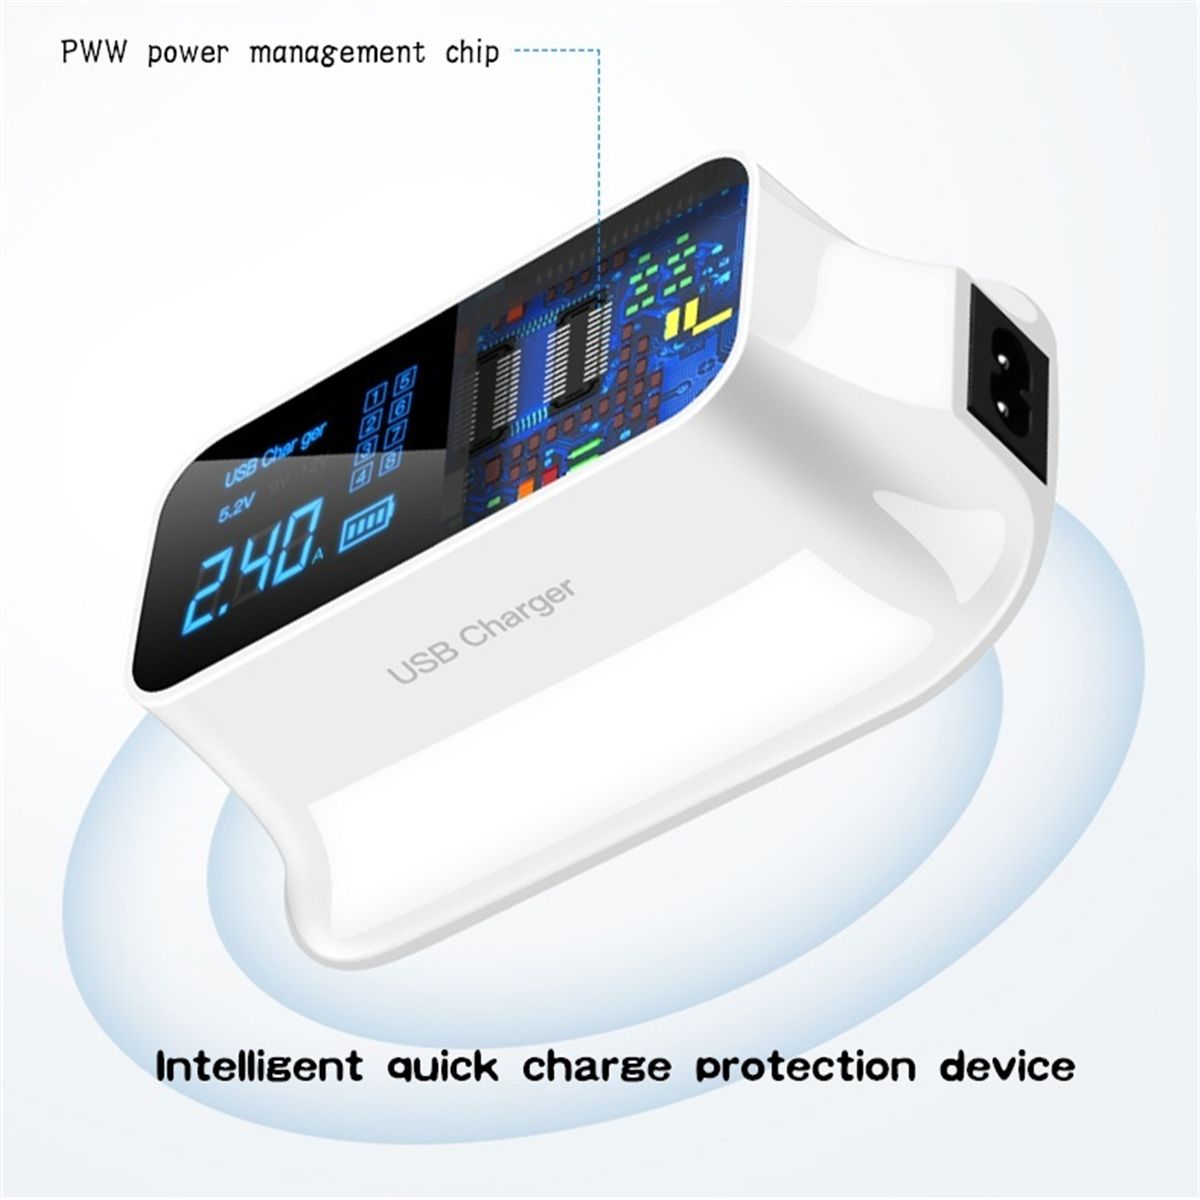 Smart-8-Port-USB-Adapter-Desktop-Phone-Charging-LED-Display-QC30-Fast-USB-Charger-1599978